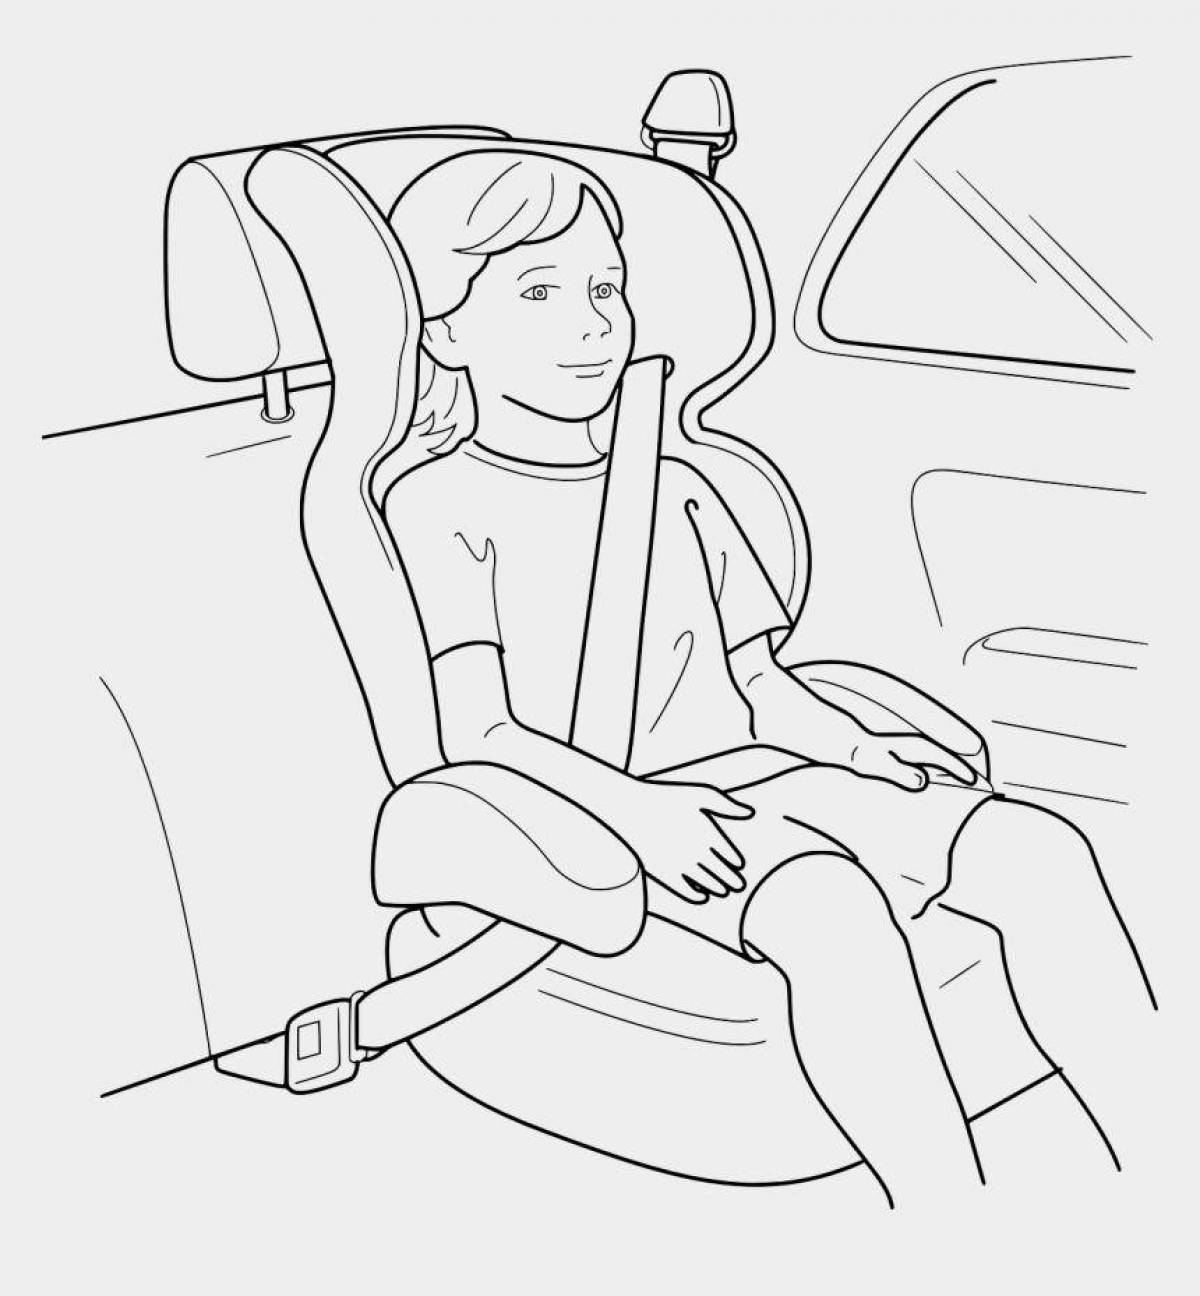 Fun car seat coloring